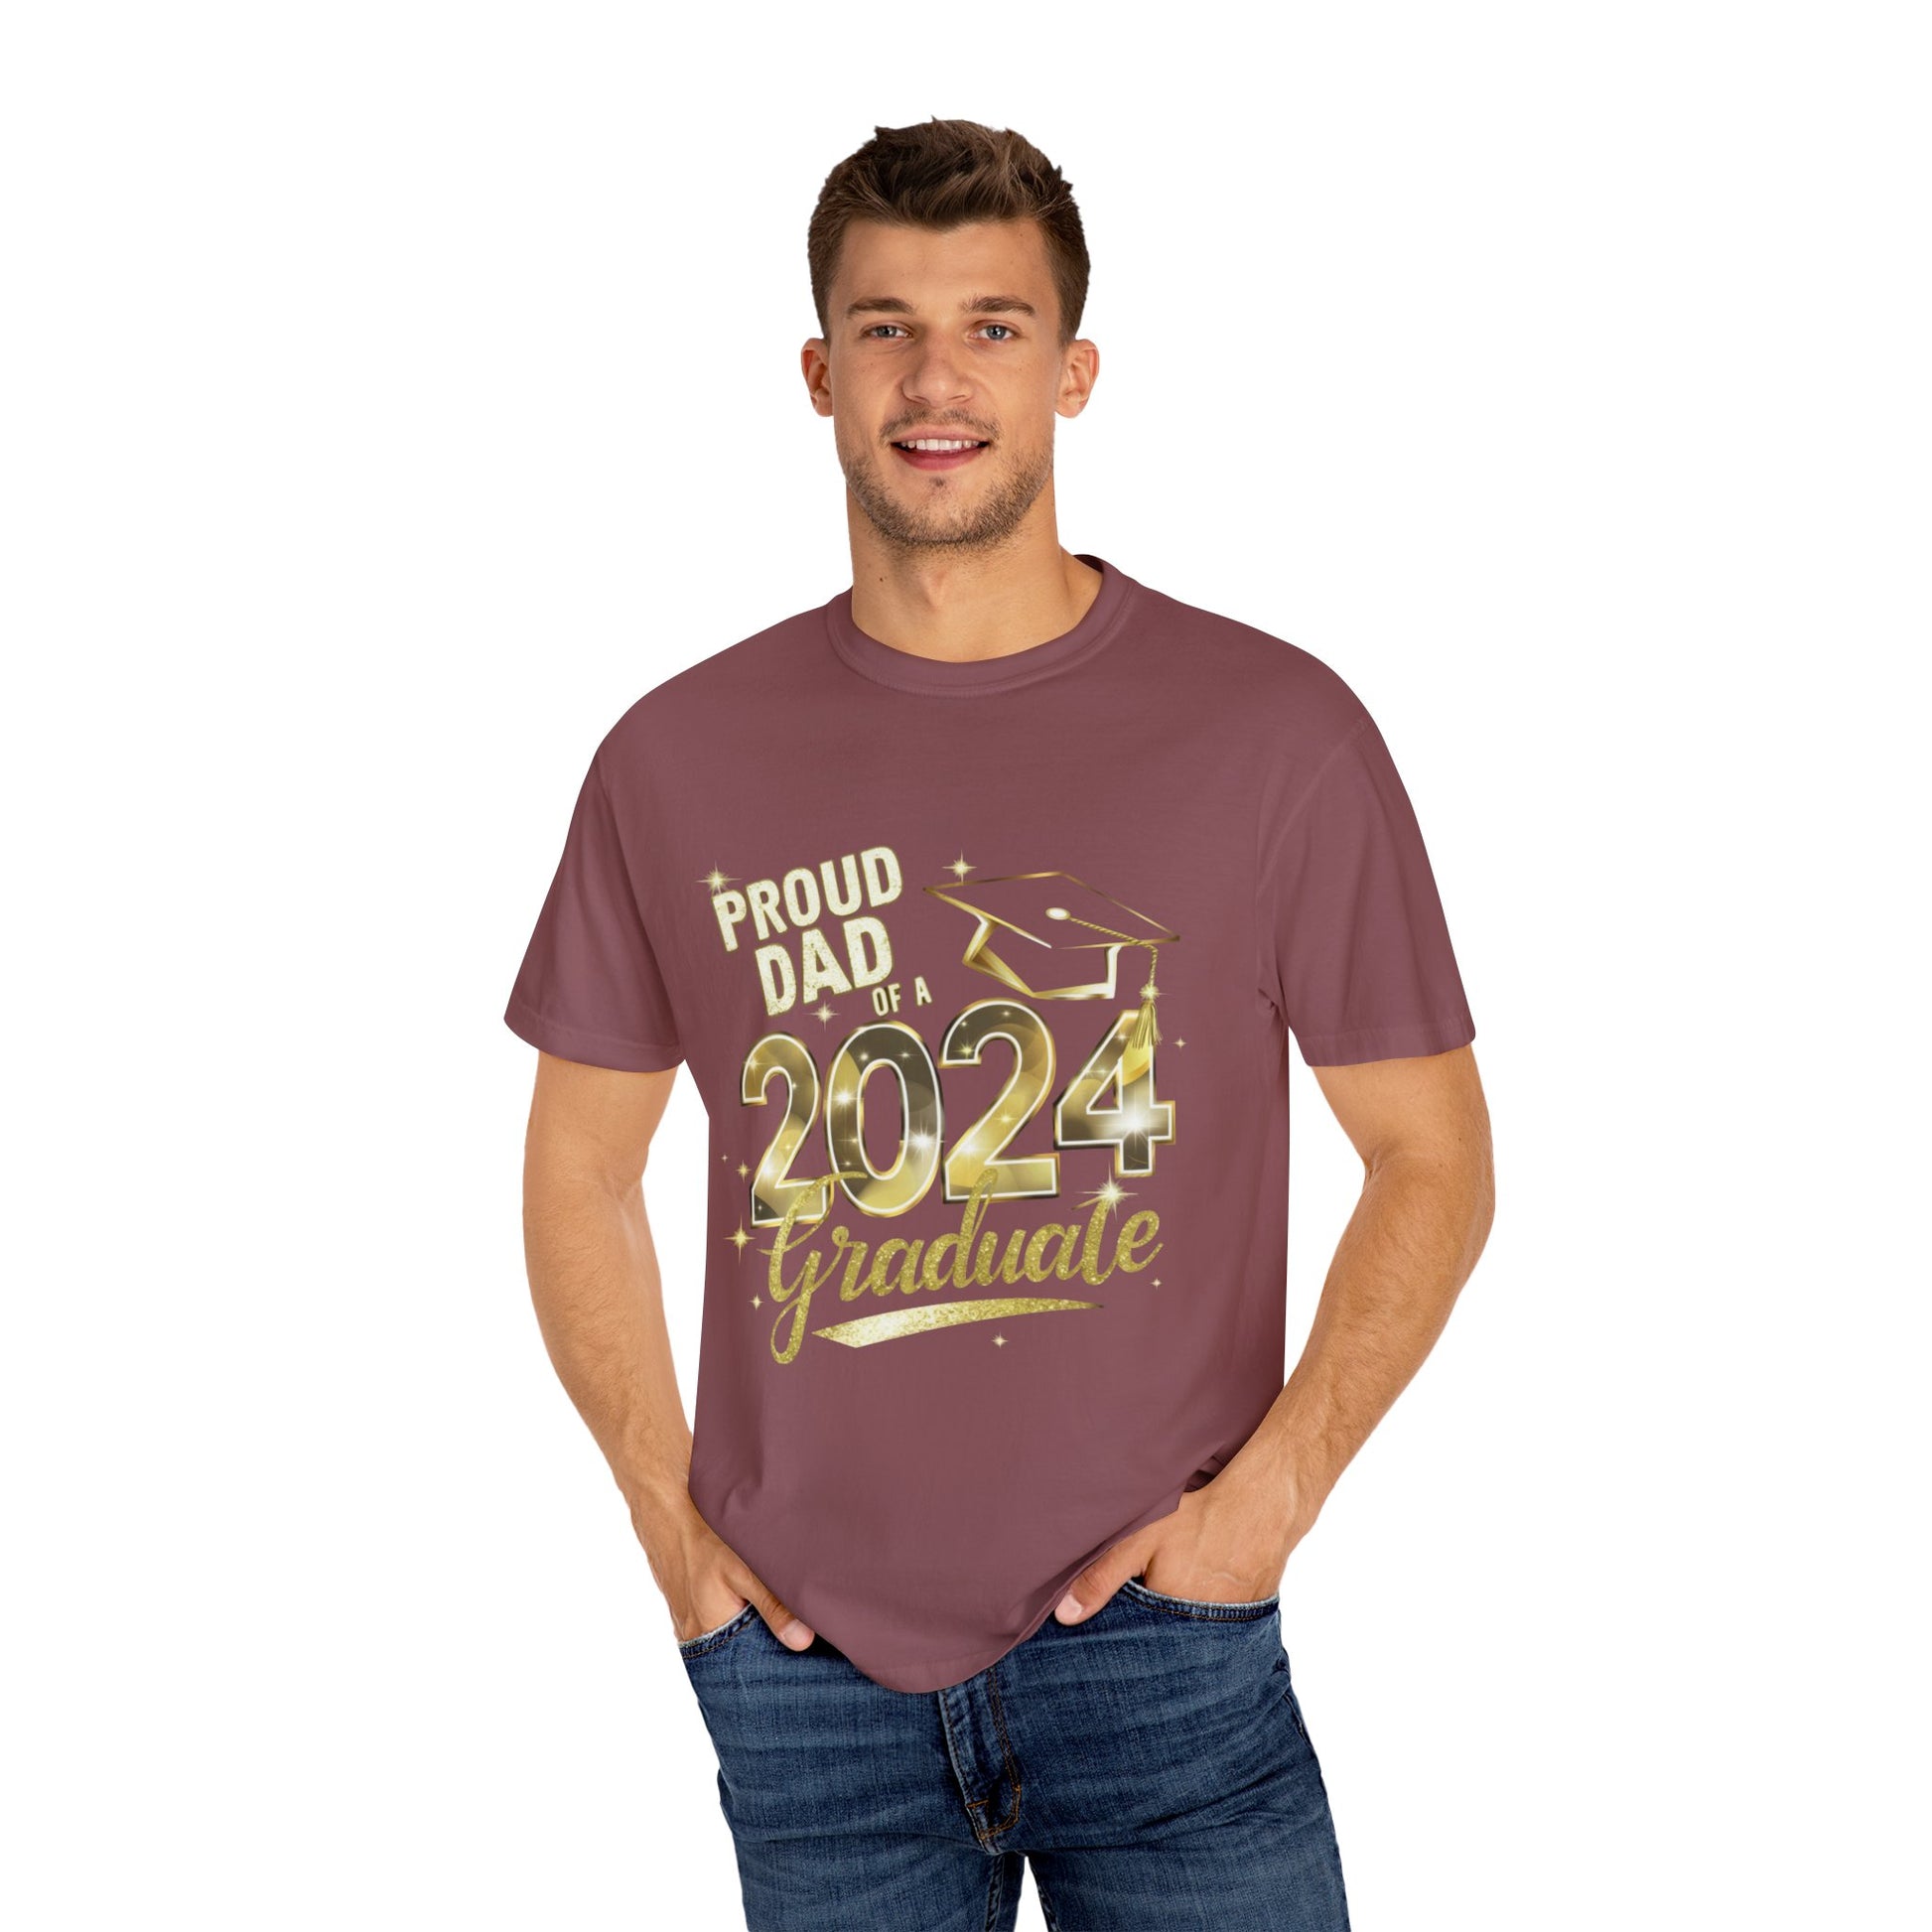 Proud of Dad 2024 Graduate Unisex Garment-dyed T-shirt Cotton Funny Humorous Graphic Soft Premium Unisex Men Women Brick T-shirt Birthday Gift-30